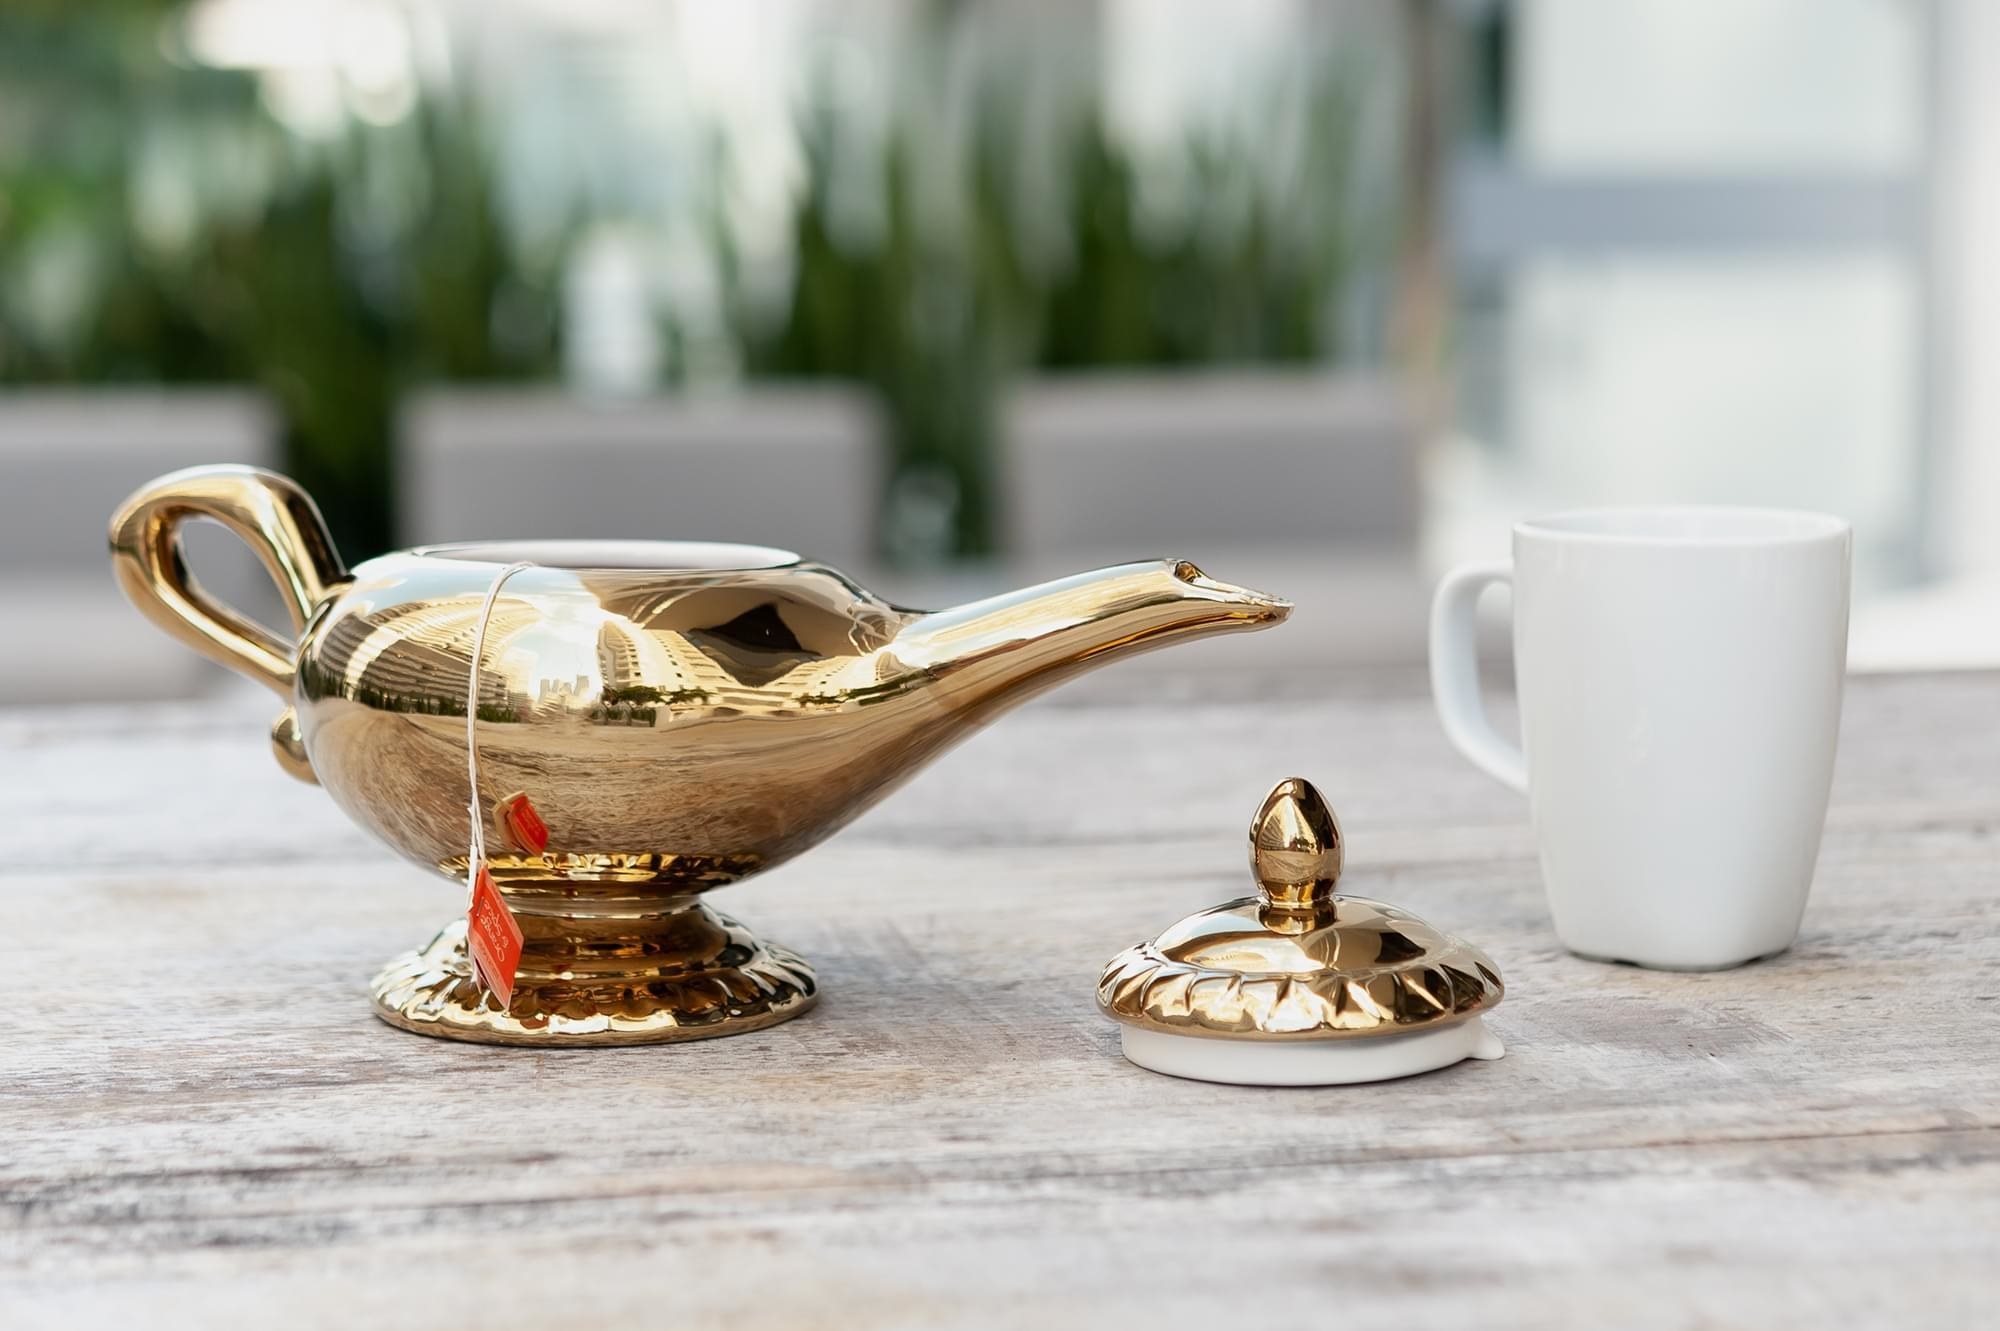 genie lamp-like teapot